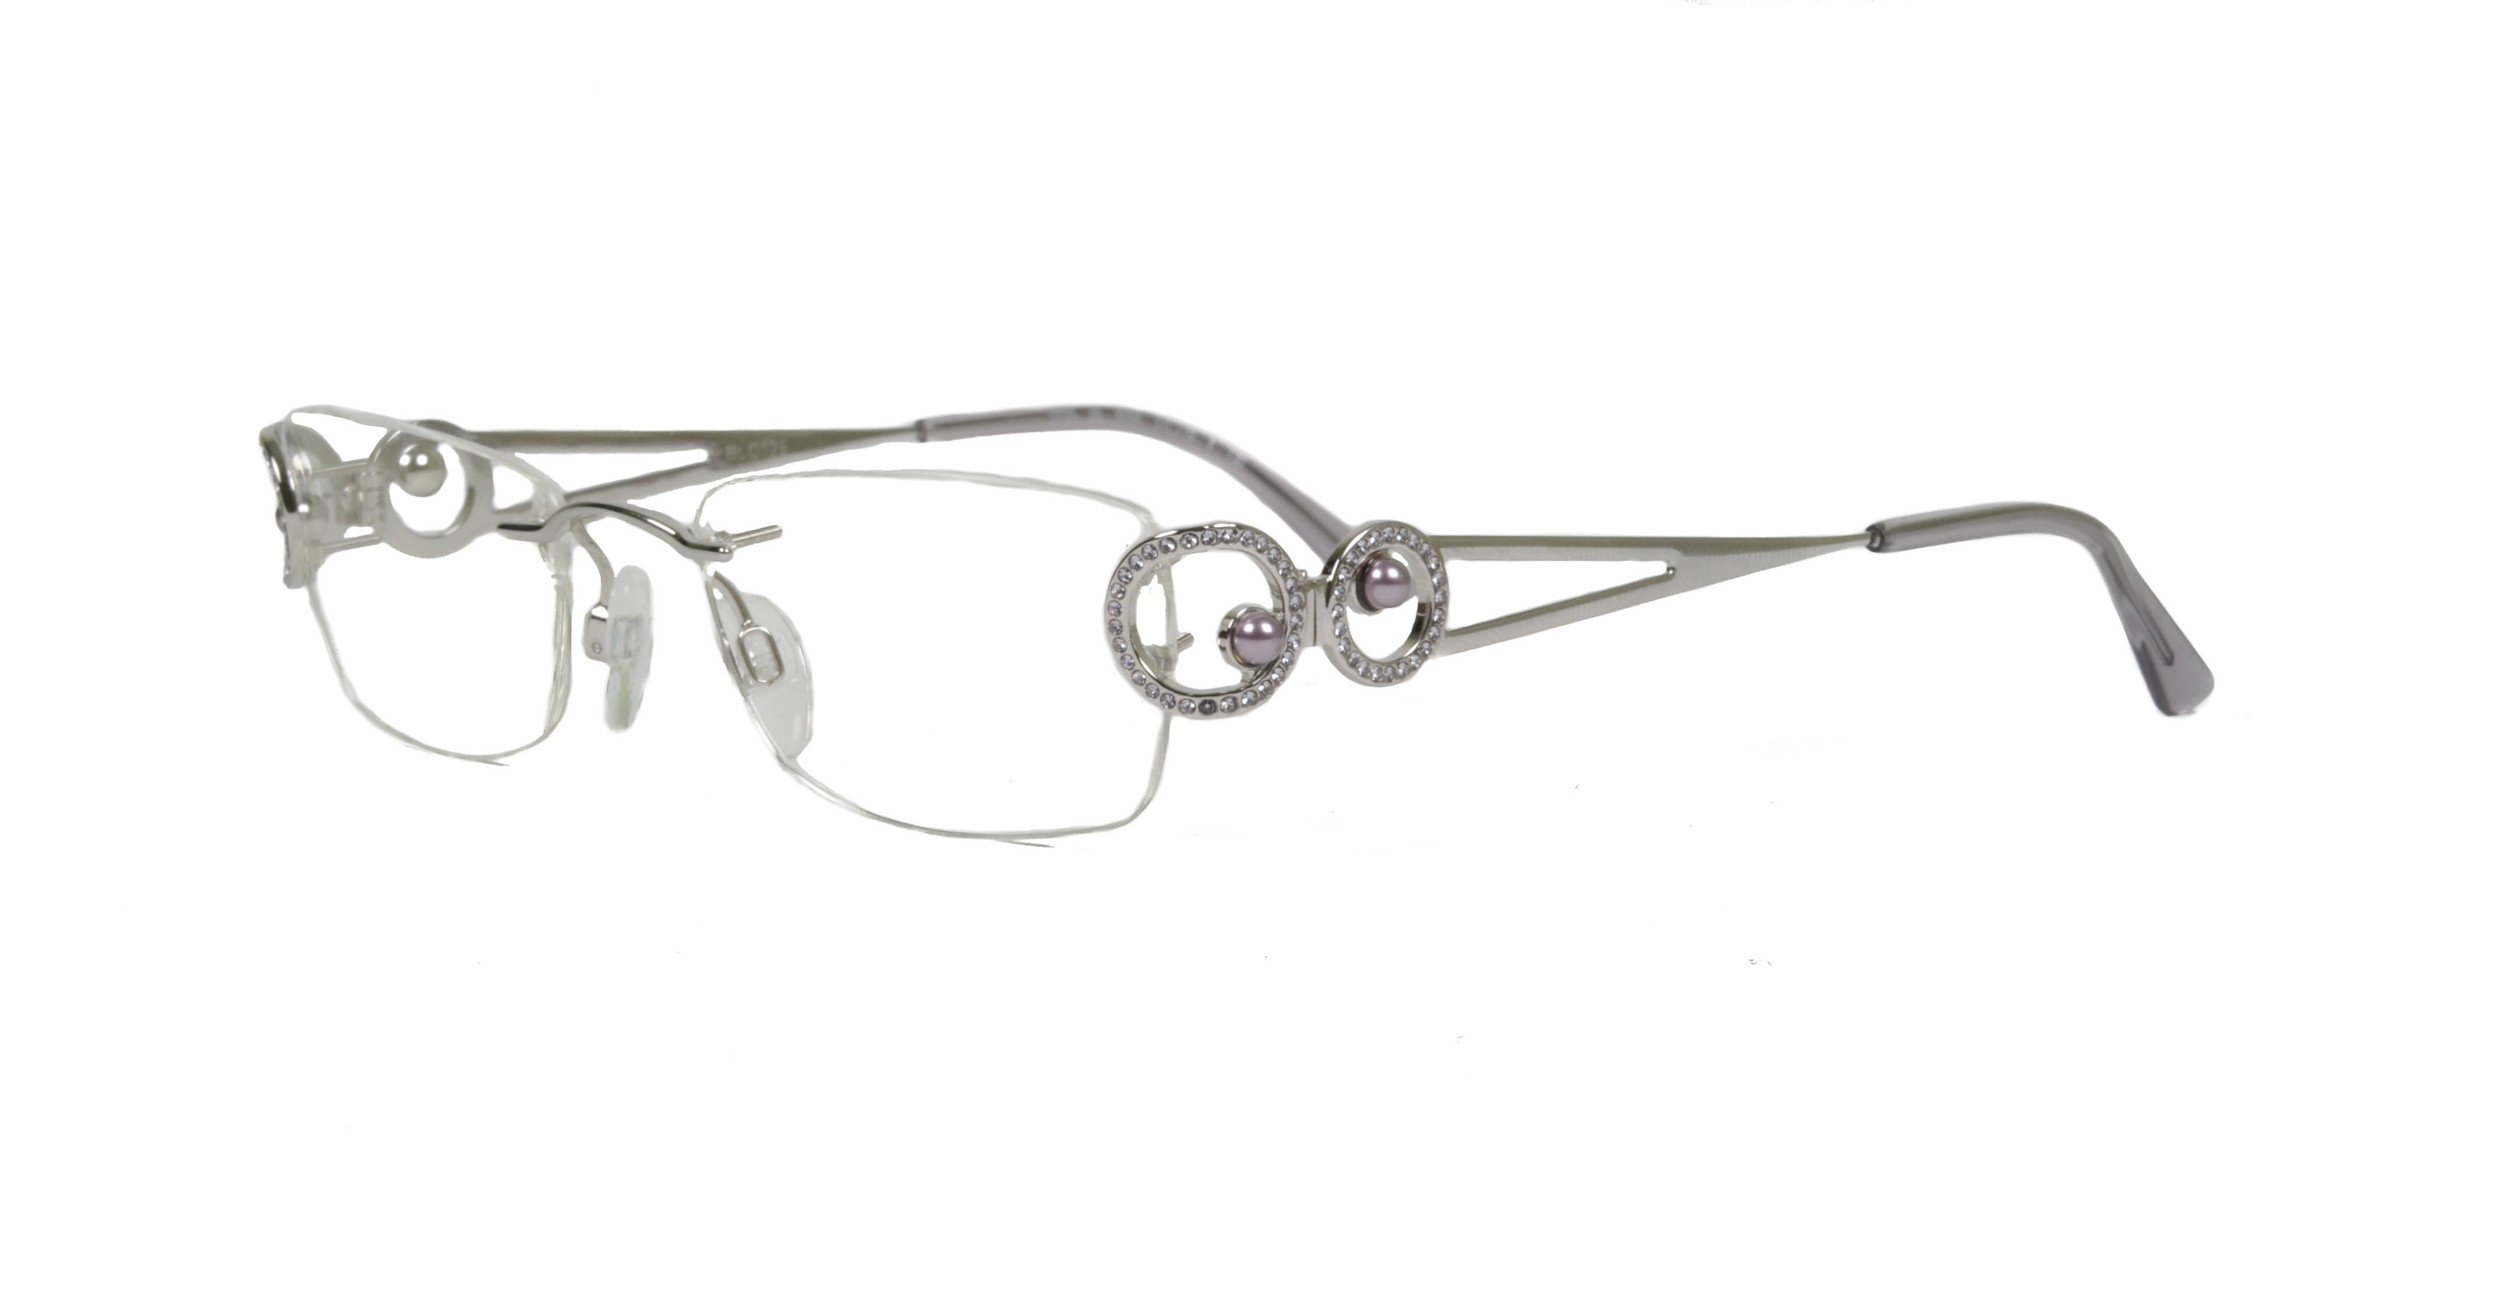 ilegal Interpretación foso Swarovski Crystal Glasses Frames Hotsell, 55% OFF | www.colegiogamarra.com